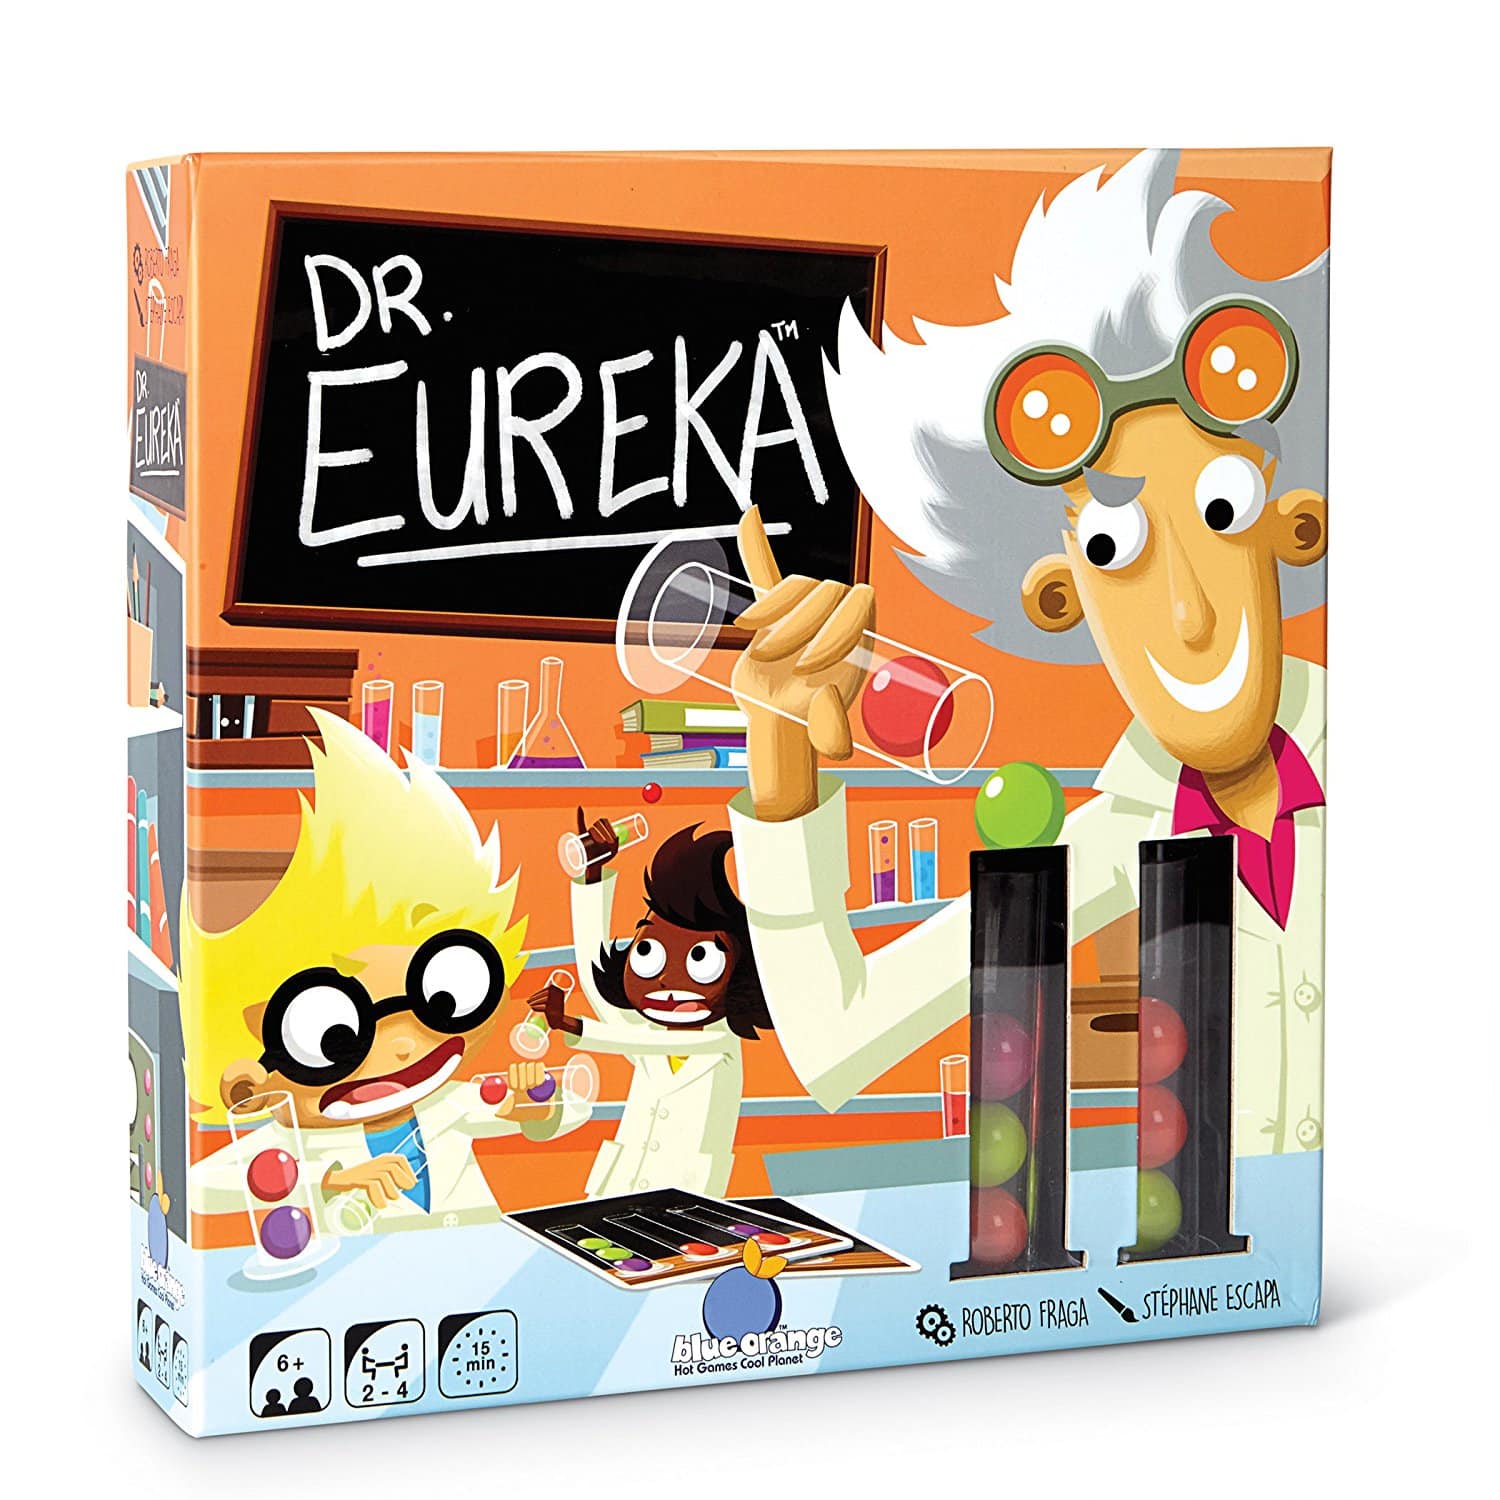 DEAL ALERT: Dr. Eureka Speed Logic Game – 40% off!